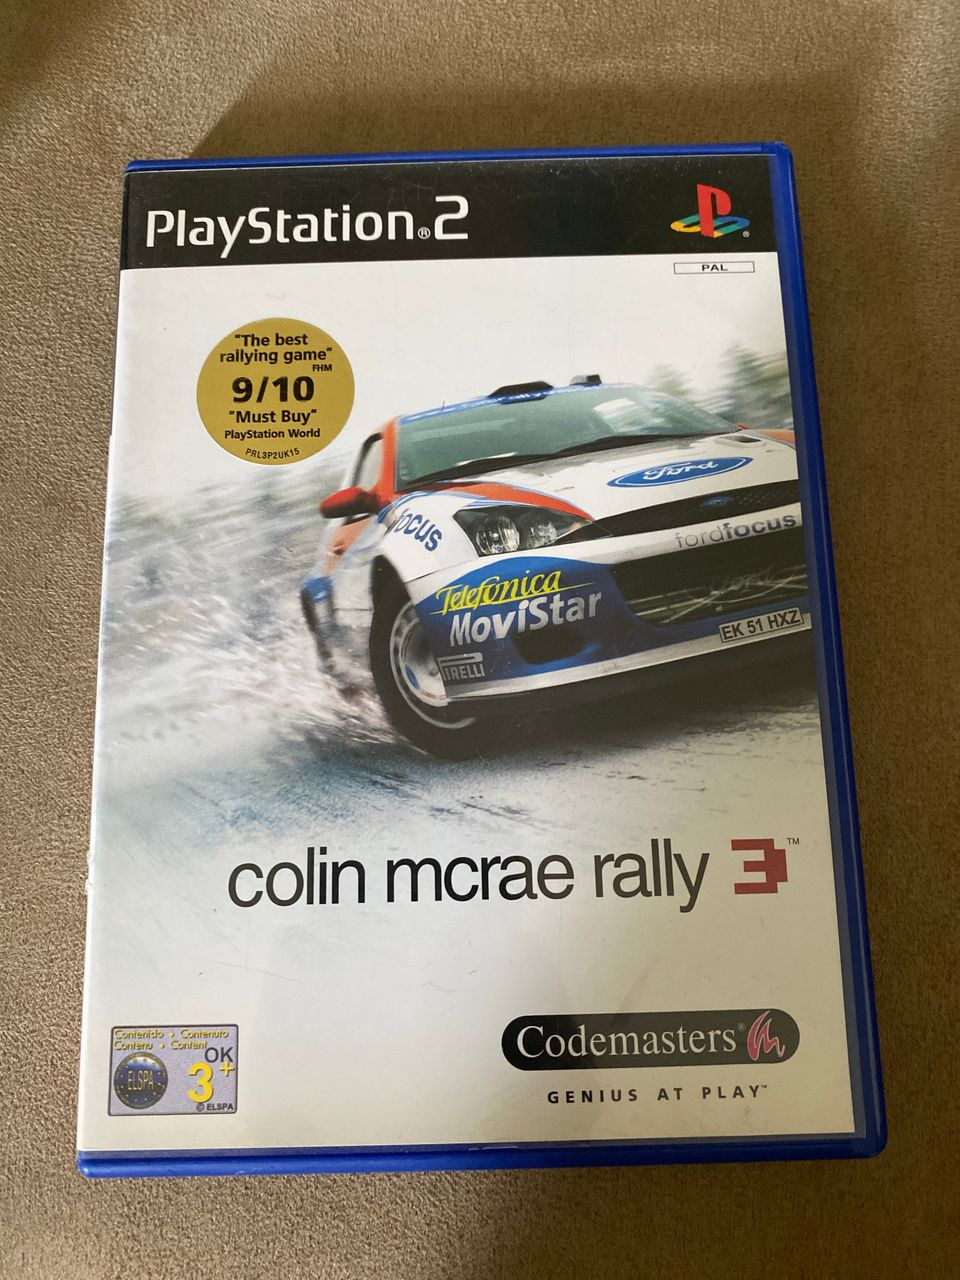 Ps2 - Colin mcrae rally 3